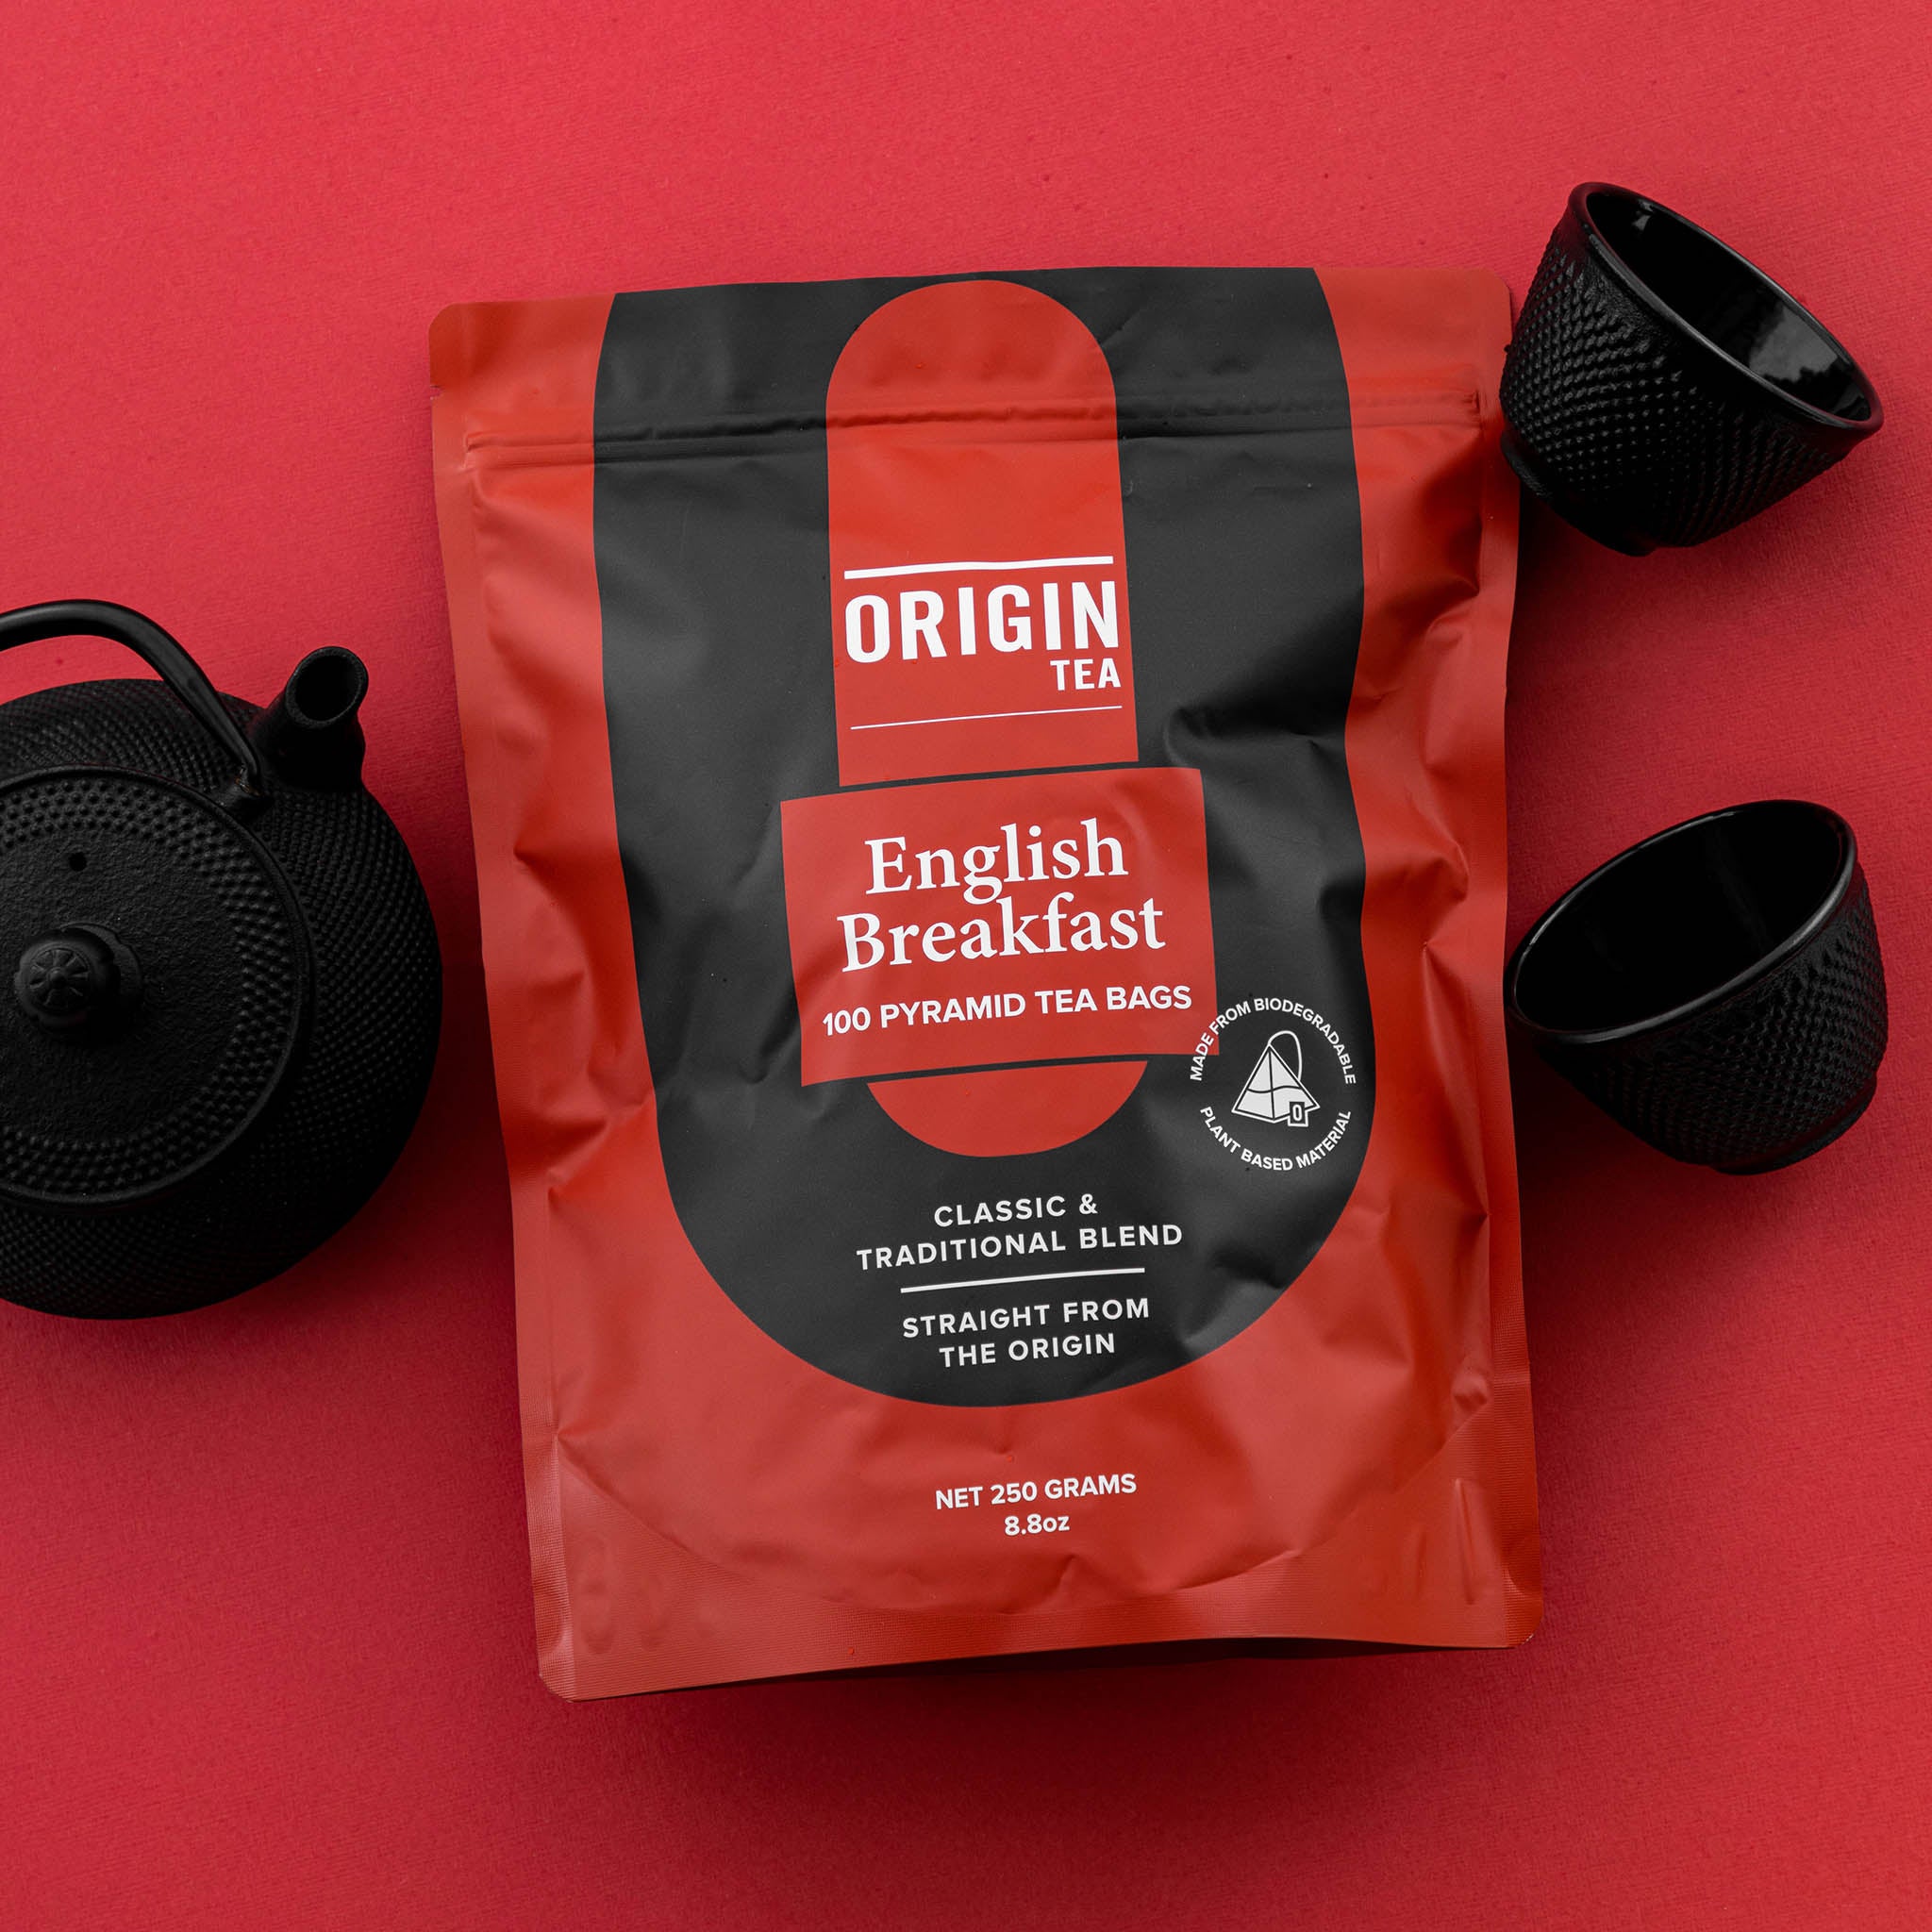 English Breakfast Pyramid Black Tea Bags - 100 Bags - Origin Tea